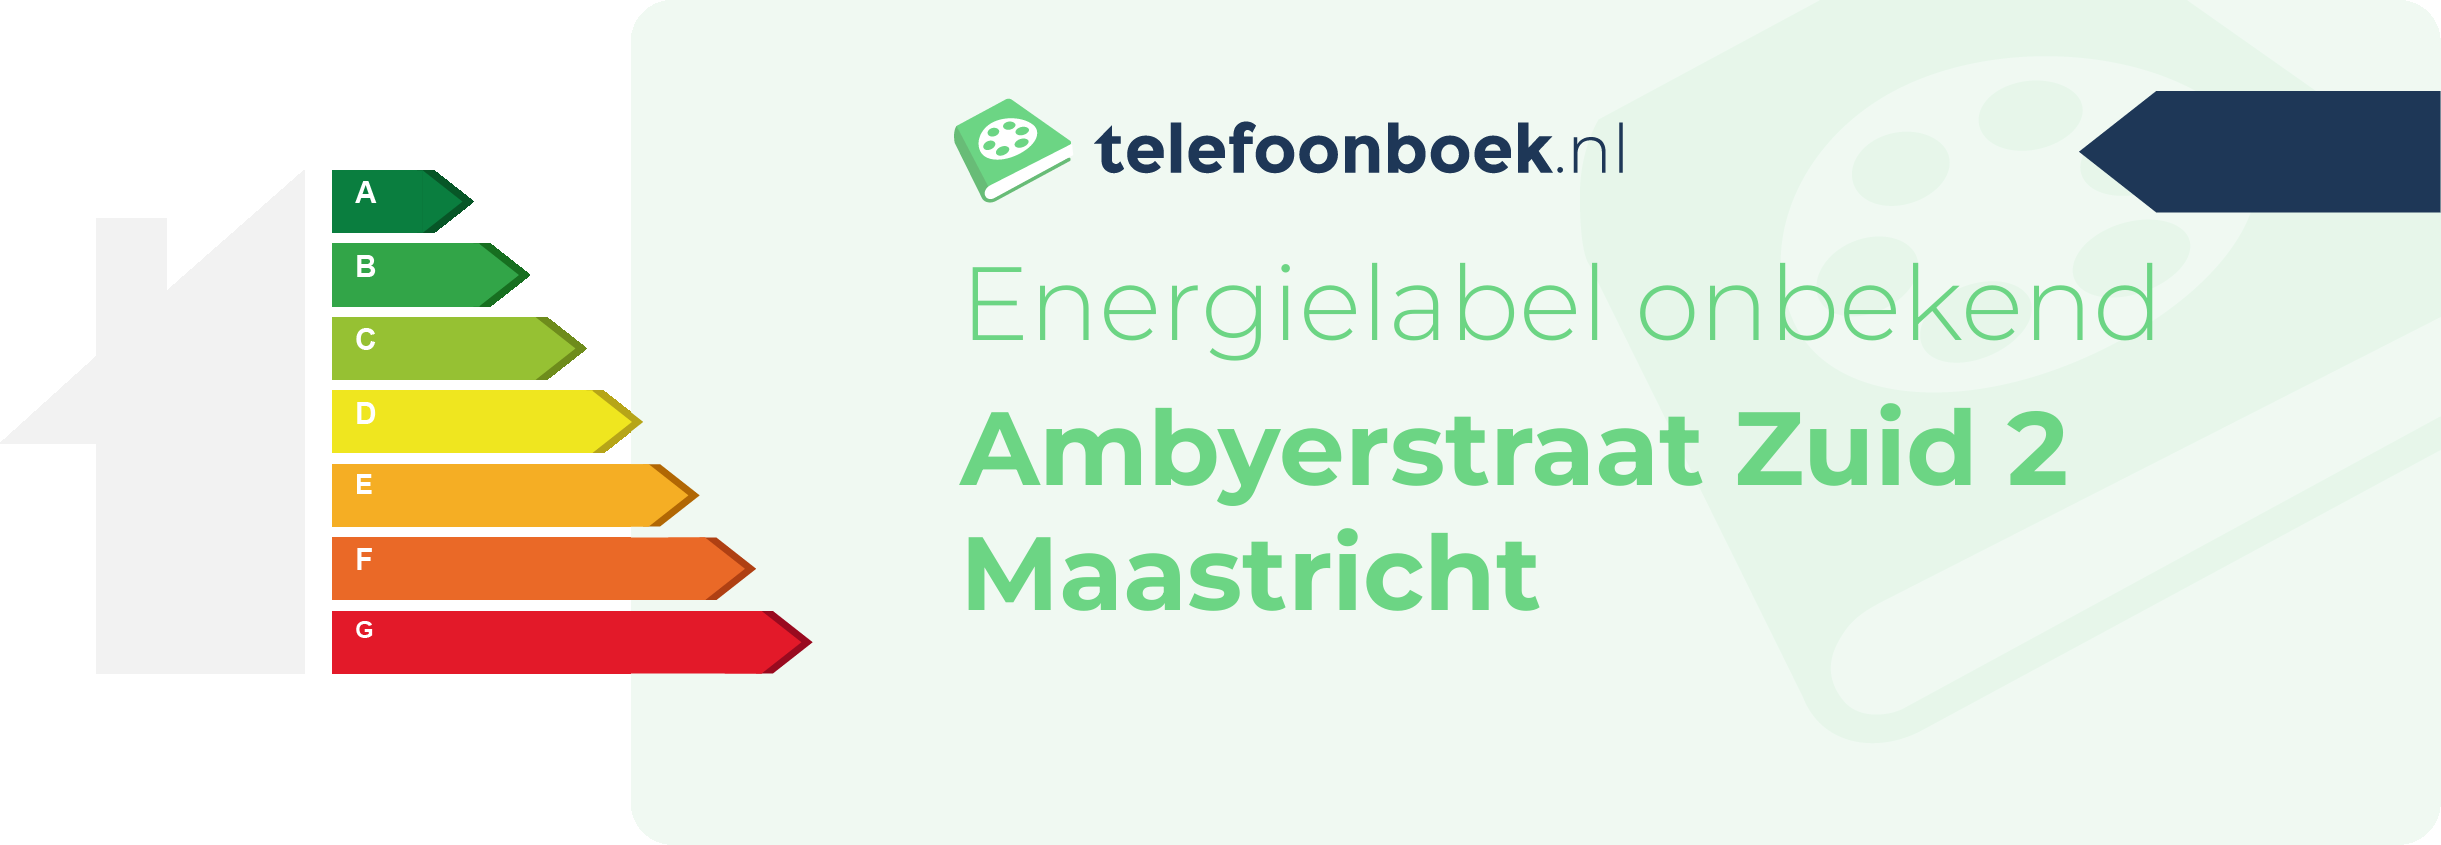 Energielabel Ambyerstraat Zuid 2 Maastricht